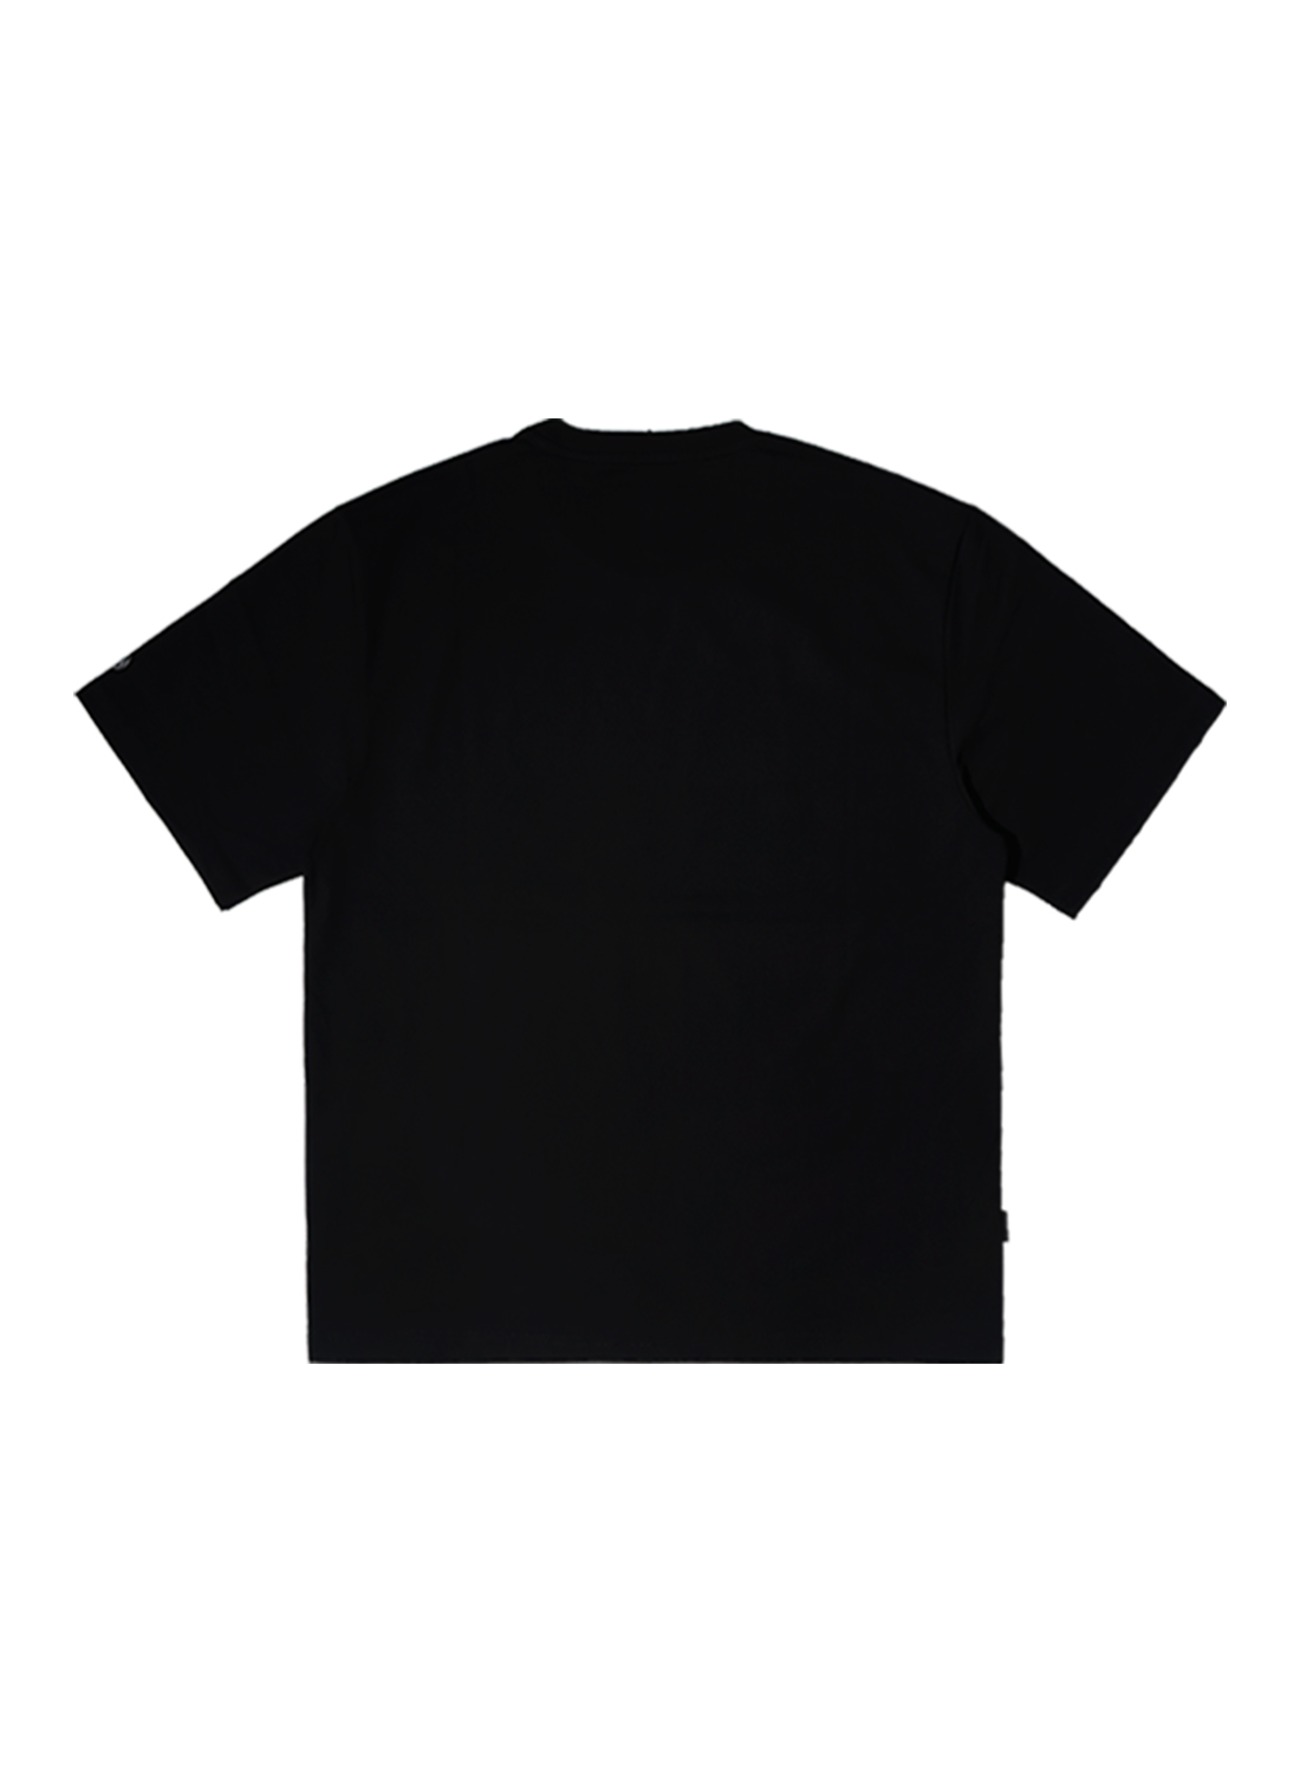 OHC 베이직 캐니언 티셔츠-블랙